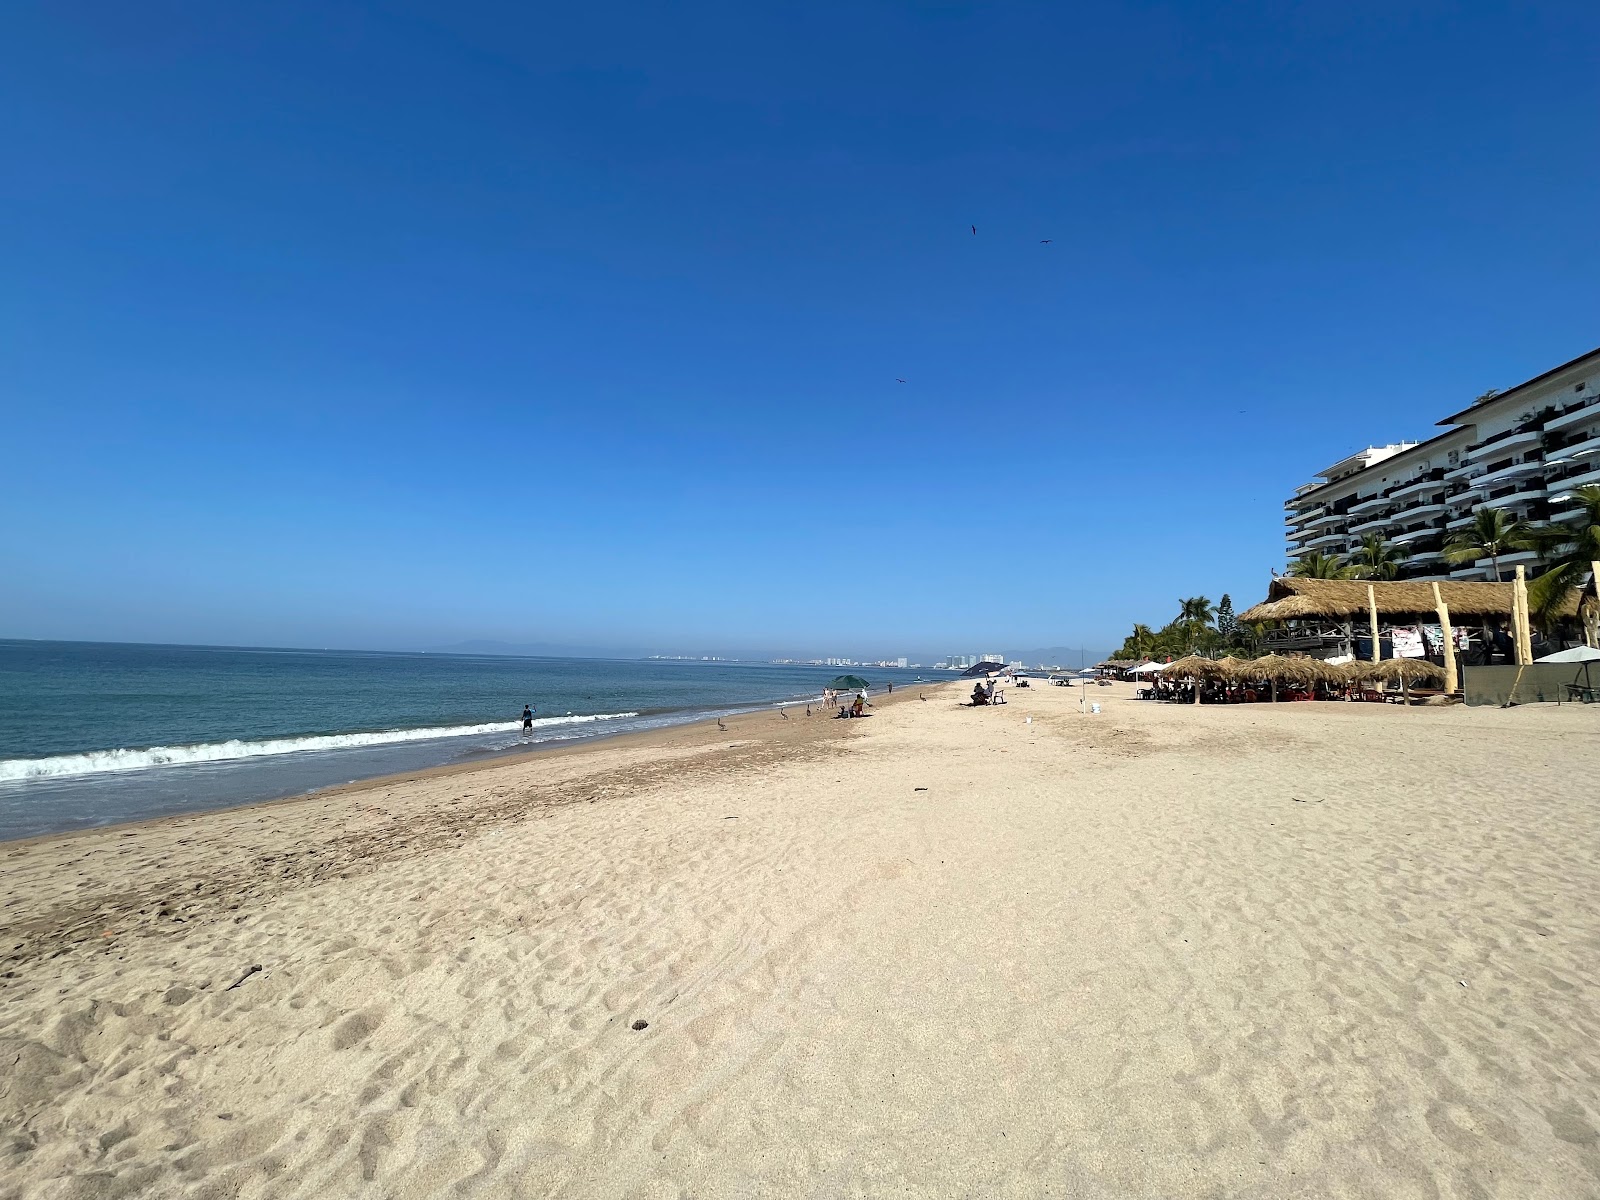 Foto av Olas Altas beach med rymlig strand